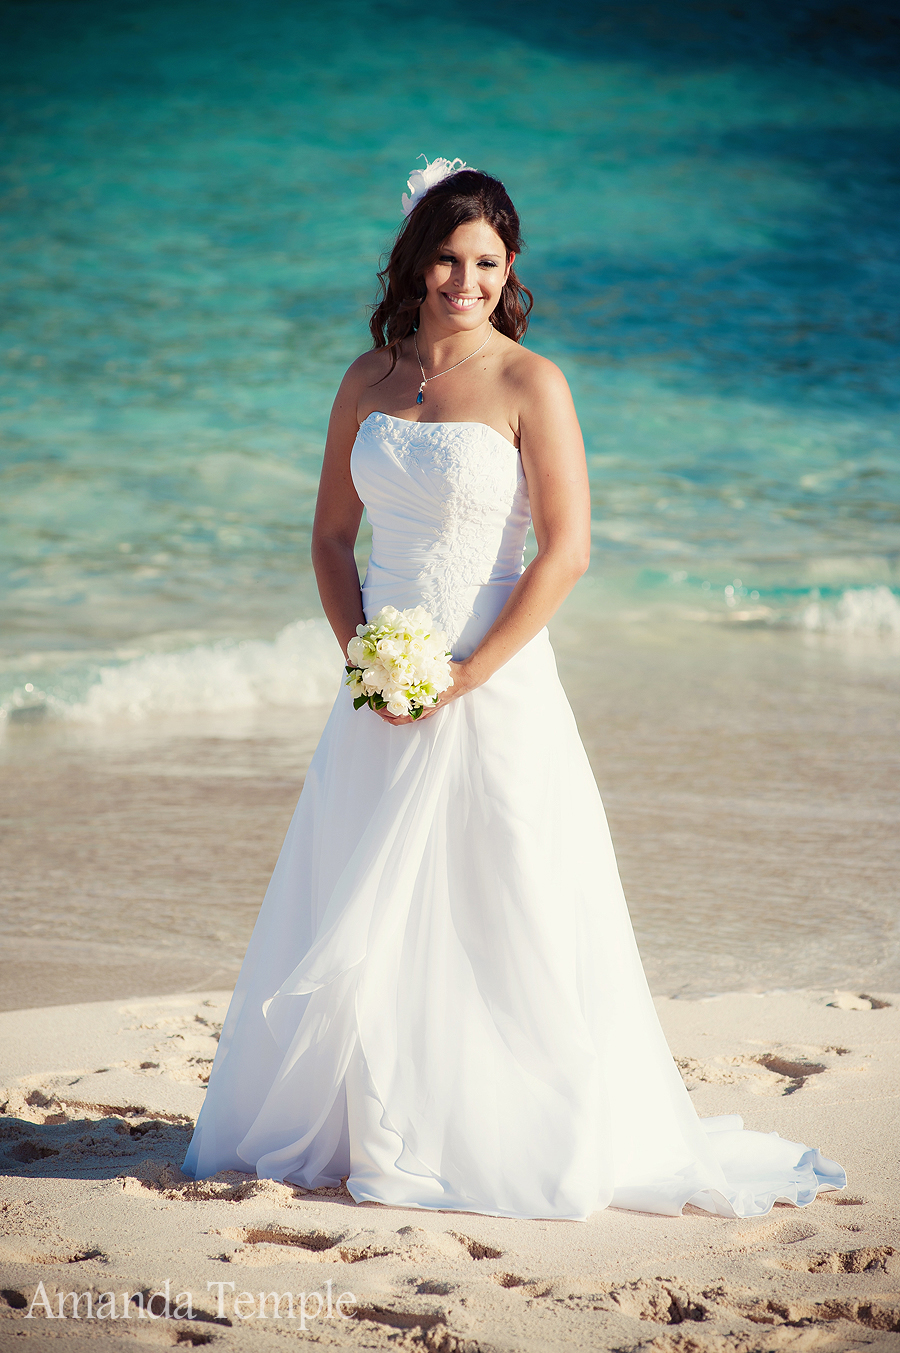 Bermuda Photographer - Amanda Temple: Melanie & Ryan: Bermuda Wedding